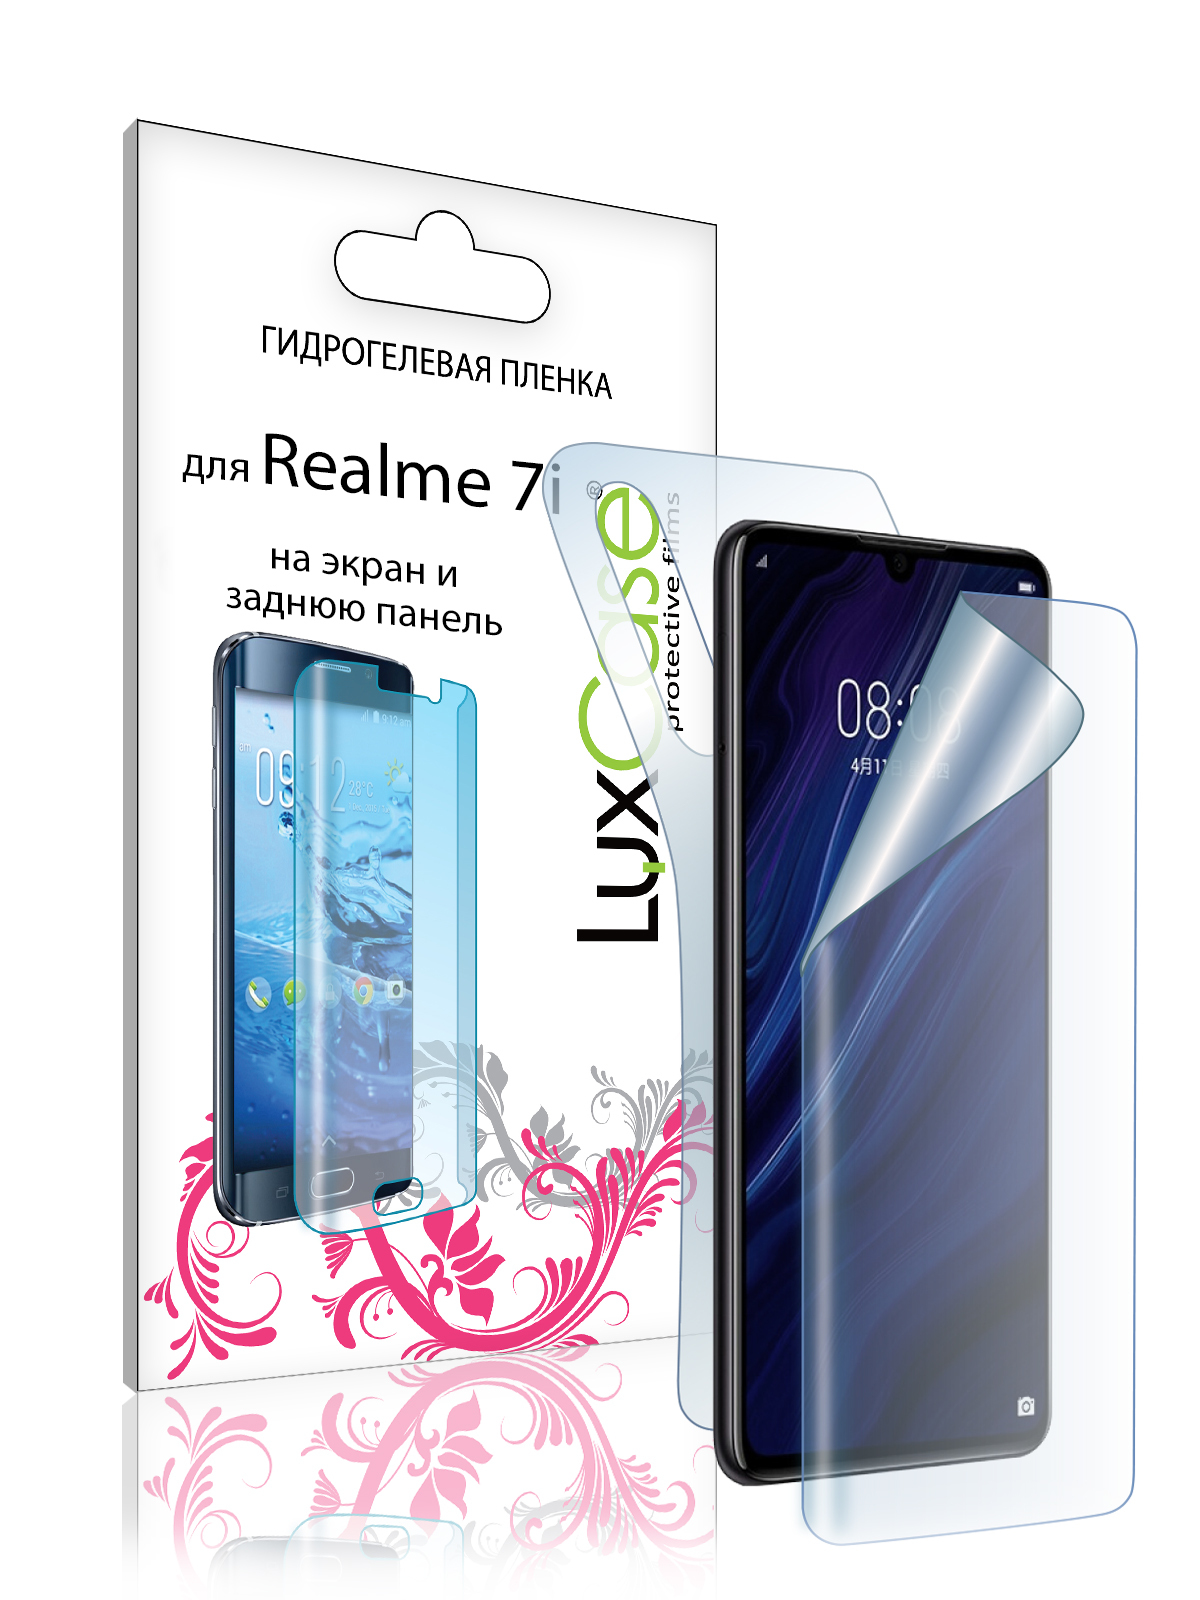 Пленка гидрогелевая LuxCase для Realme 7i 0.14mm Front and Back Transparent 86593 пленка гидрогелевая luxcase для realme 7i 0 14mm front and back transparent 86593